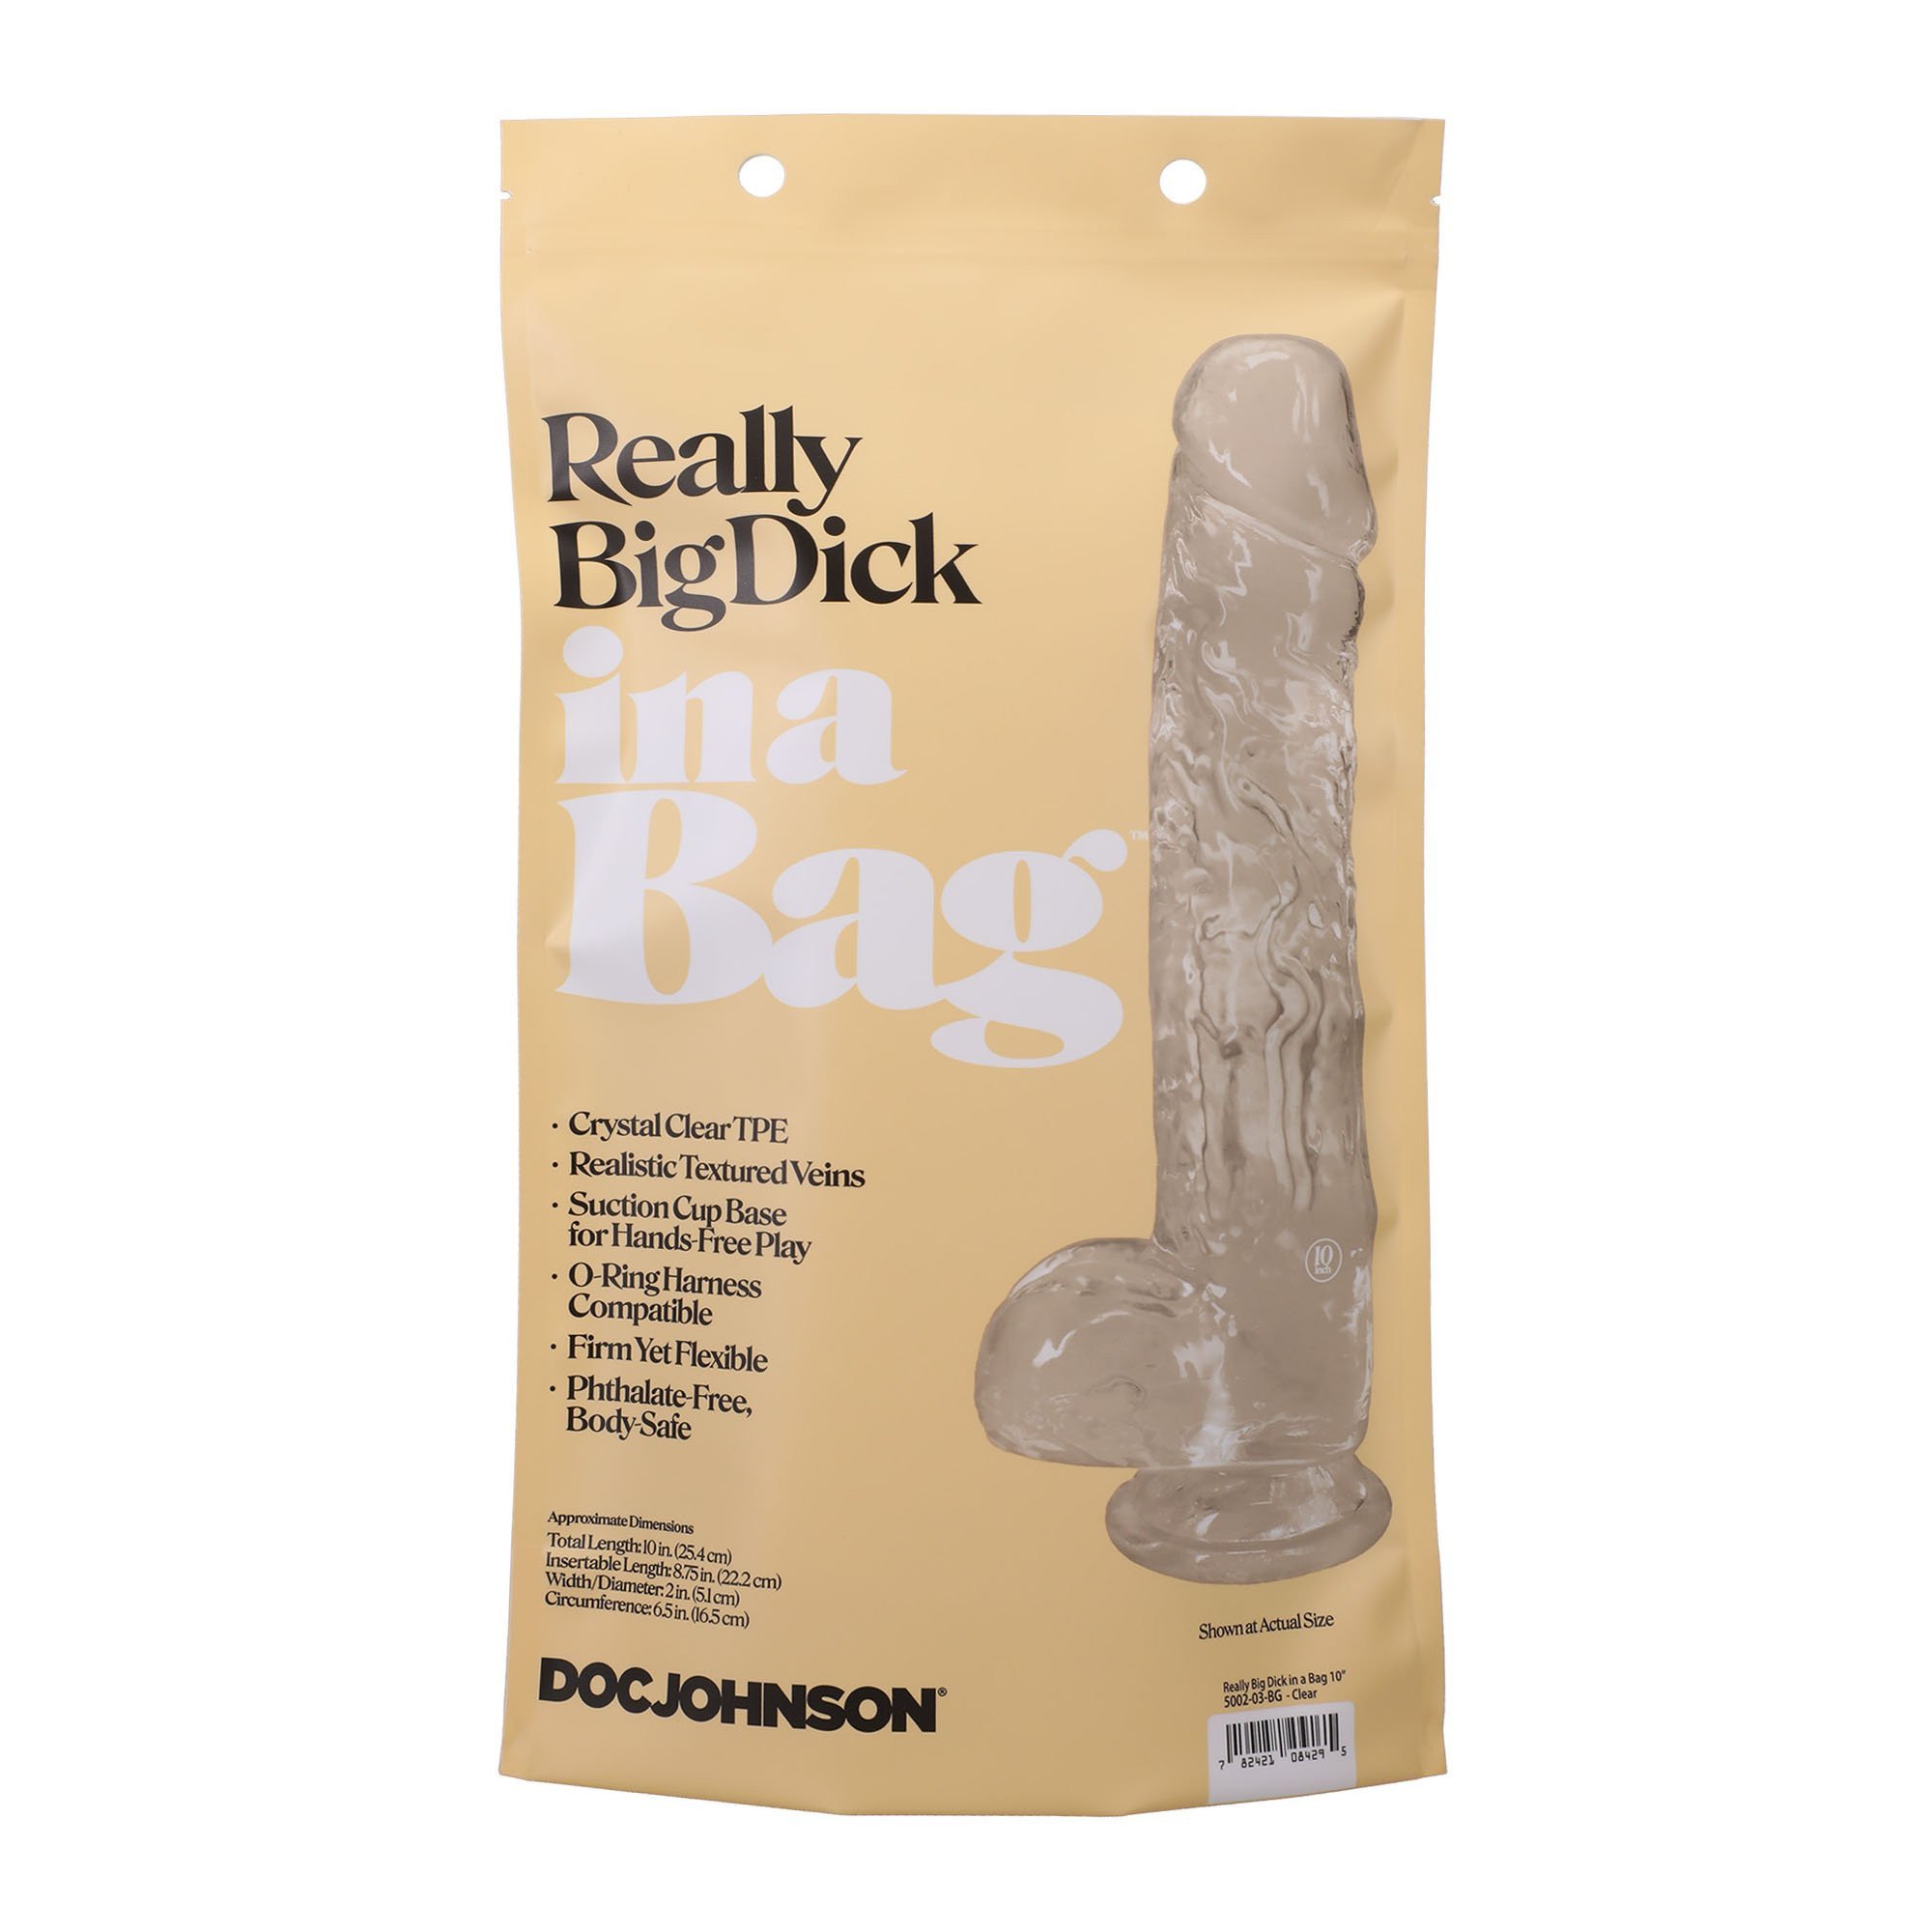 Falo imitatorius „Really Big Dick in a Bag“ - Doc Johnson